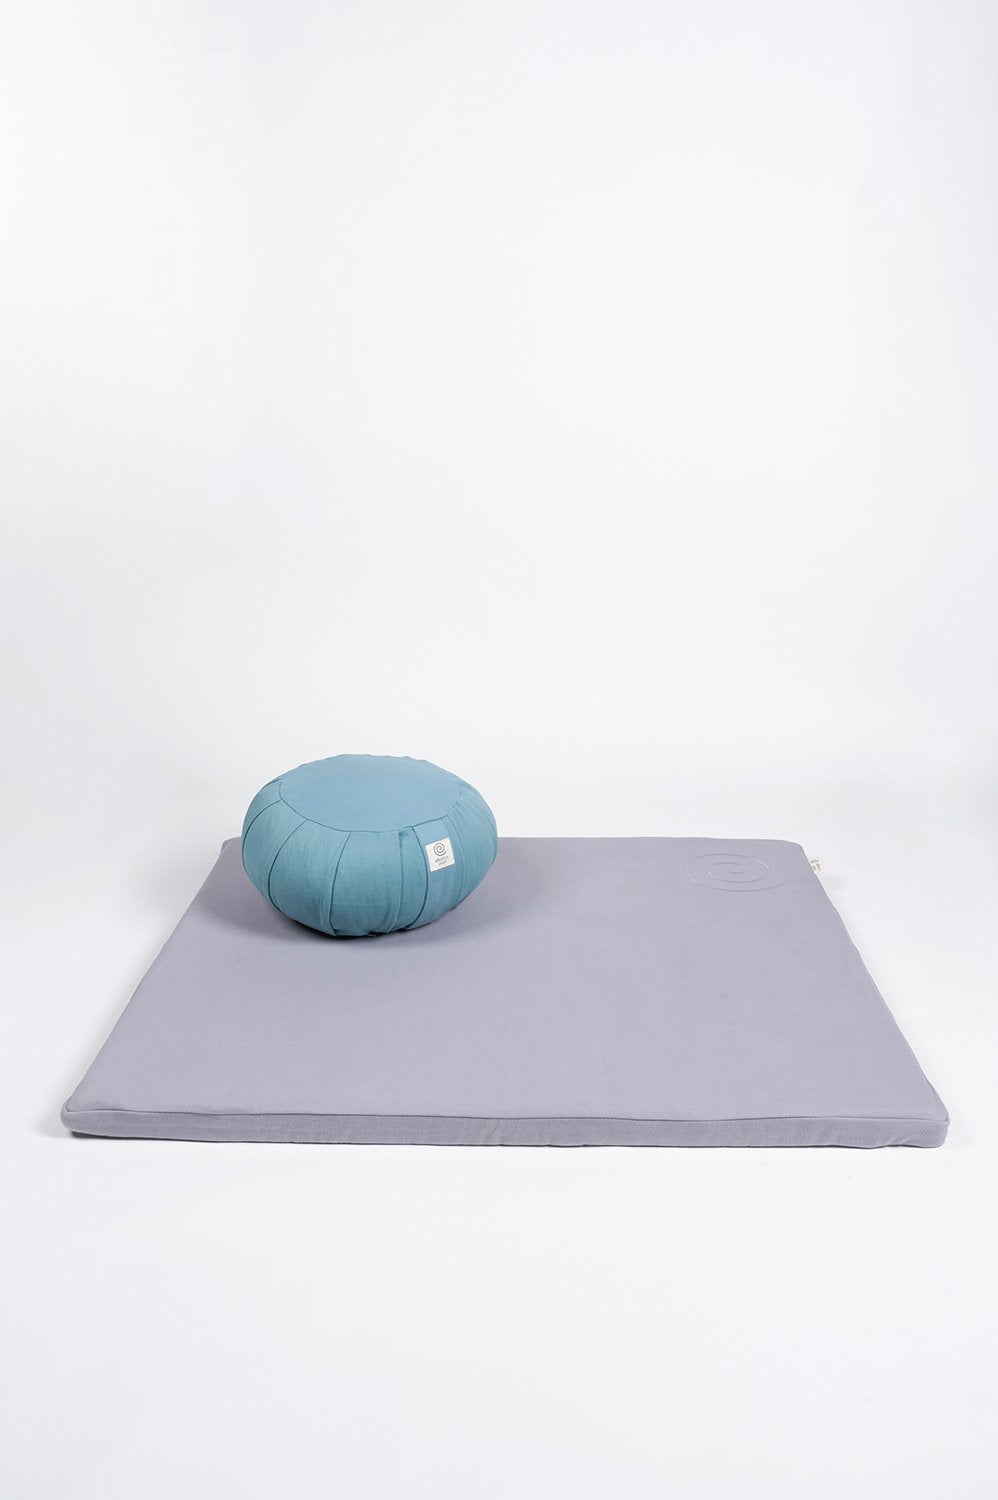 Meditation Cushions and Zafus